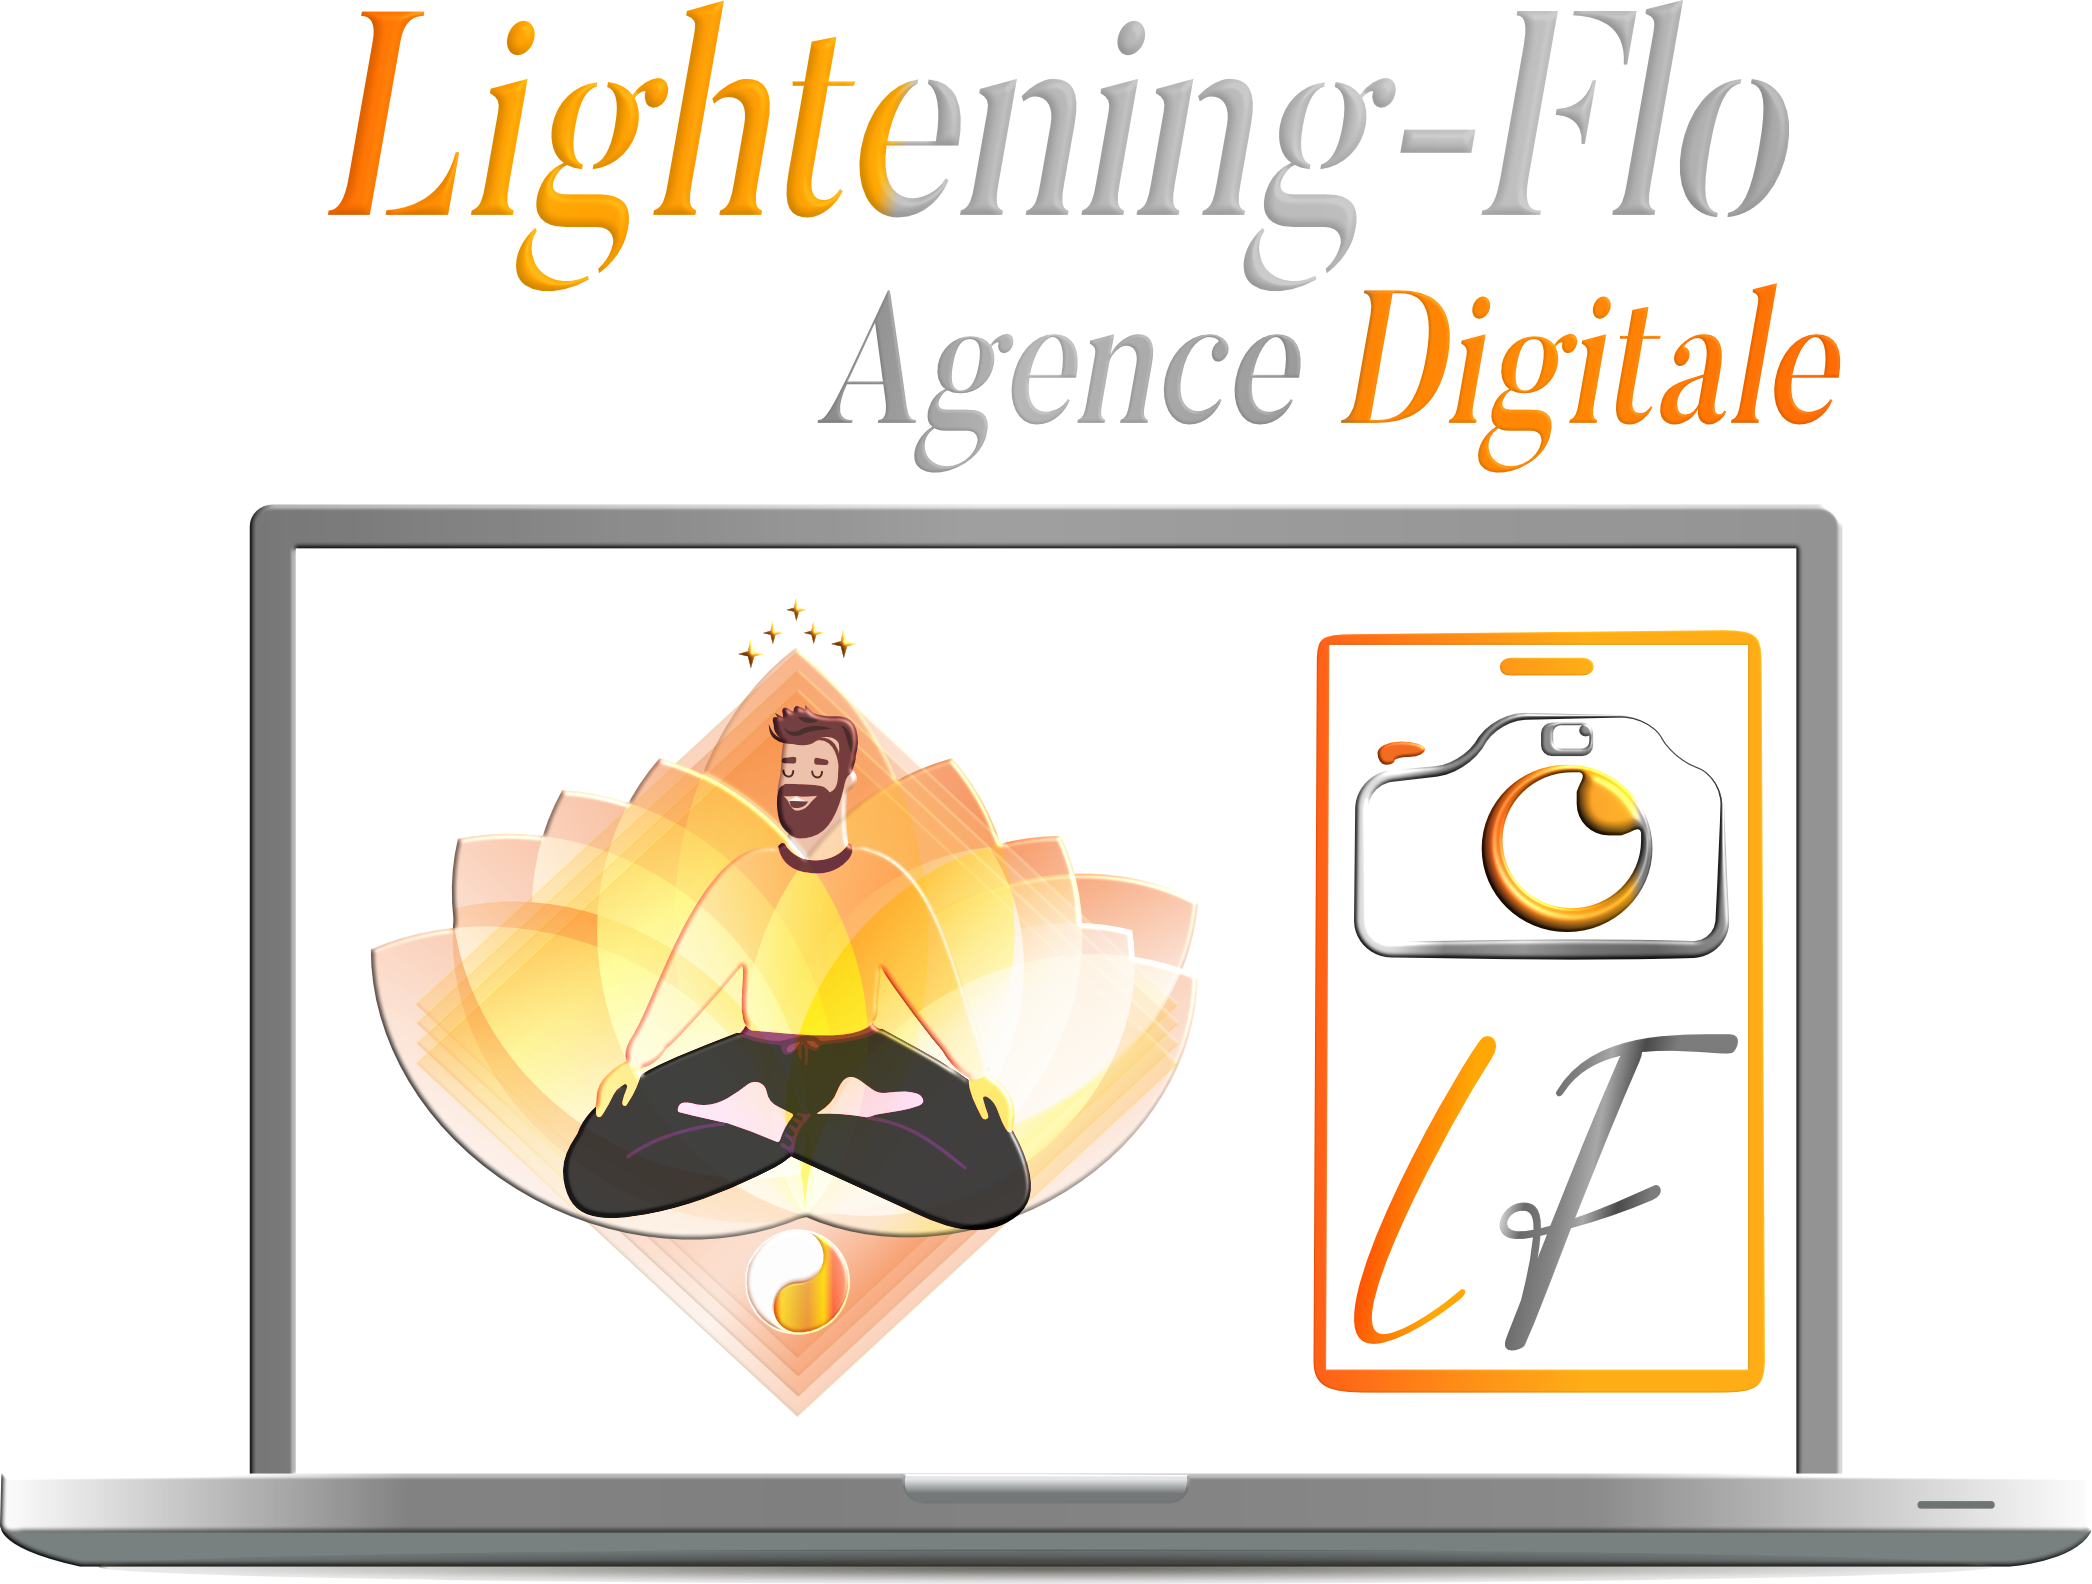 Lightening-flo